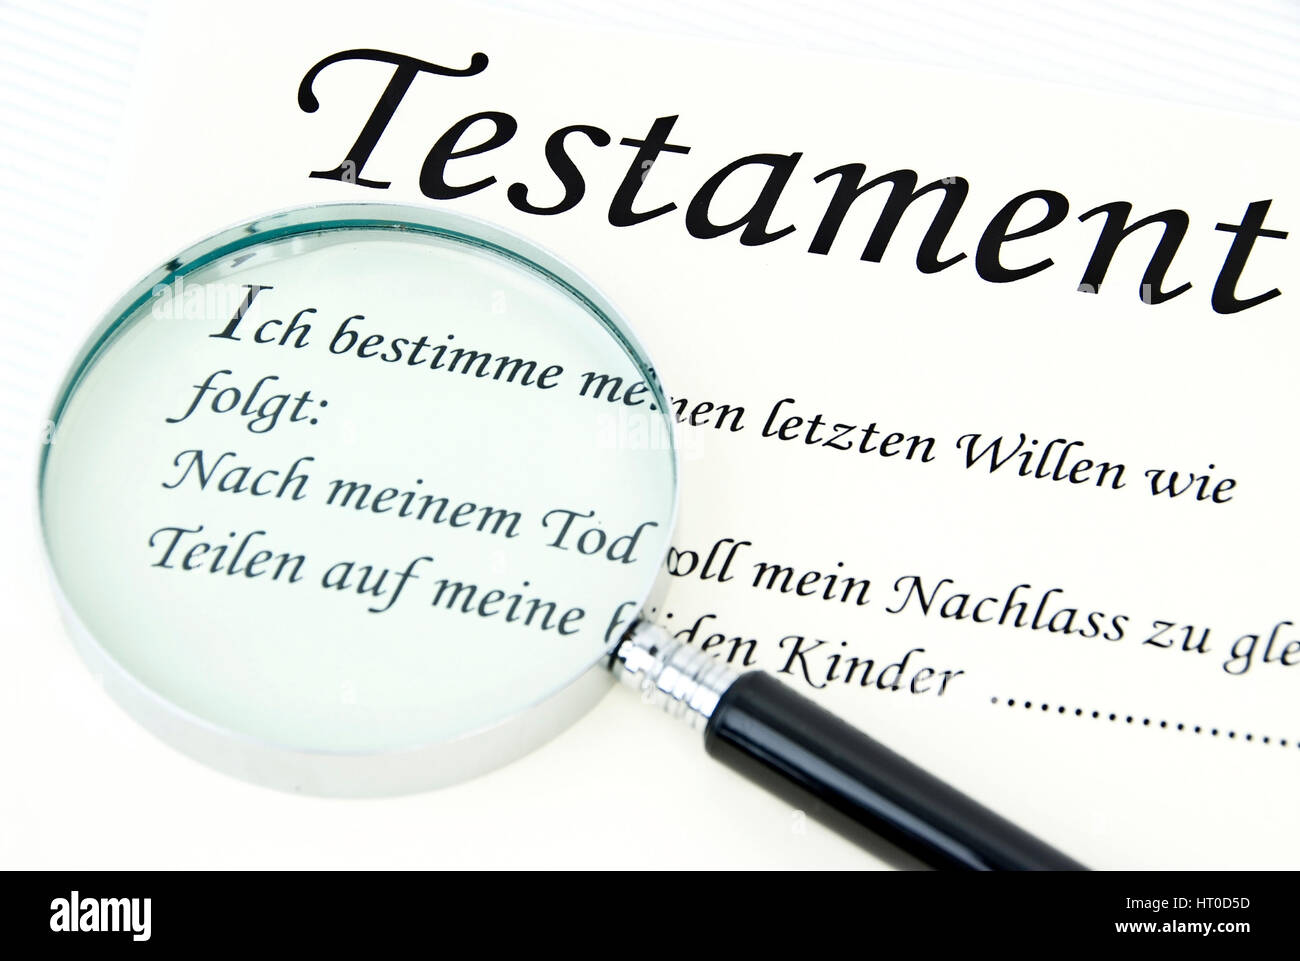 Symbolbild Testament unter der Lupe - symbolic for testament under loupe Stock Photo